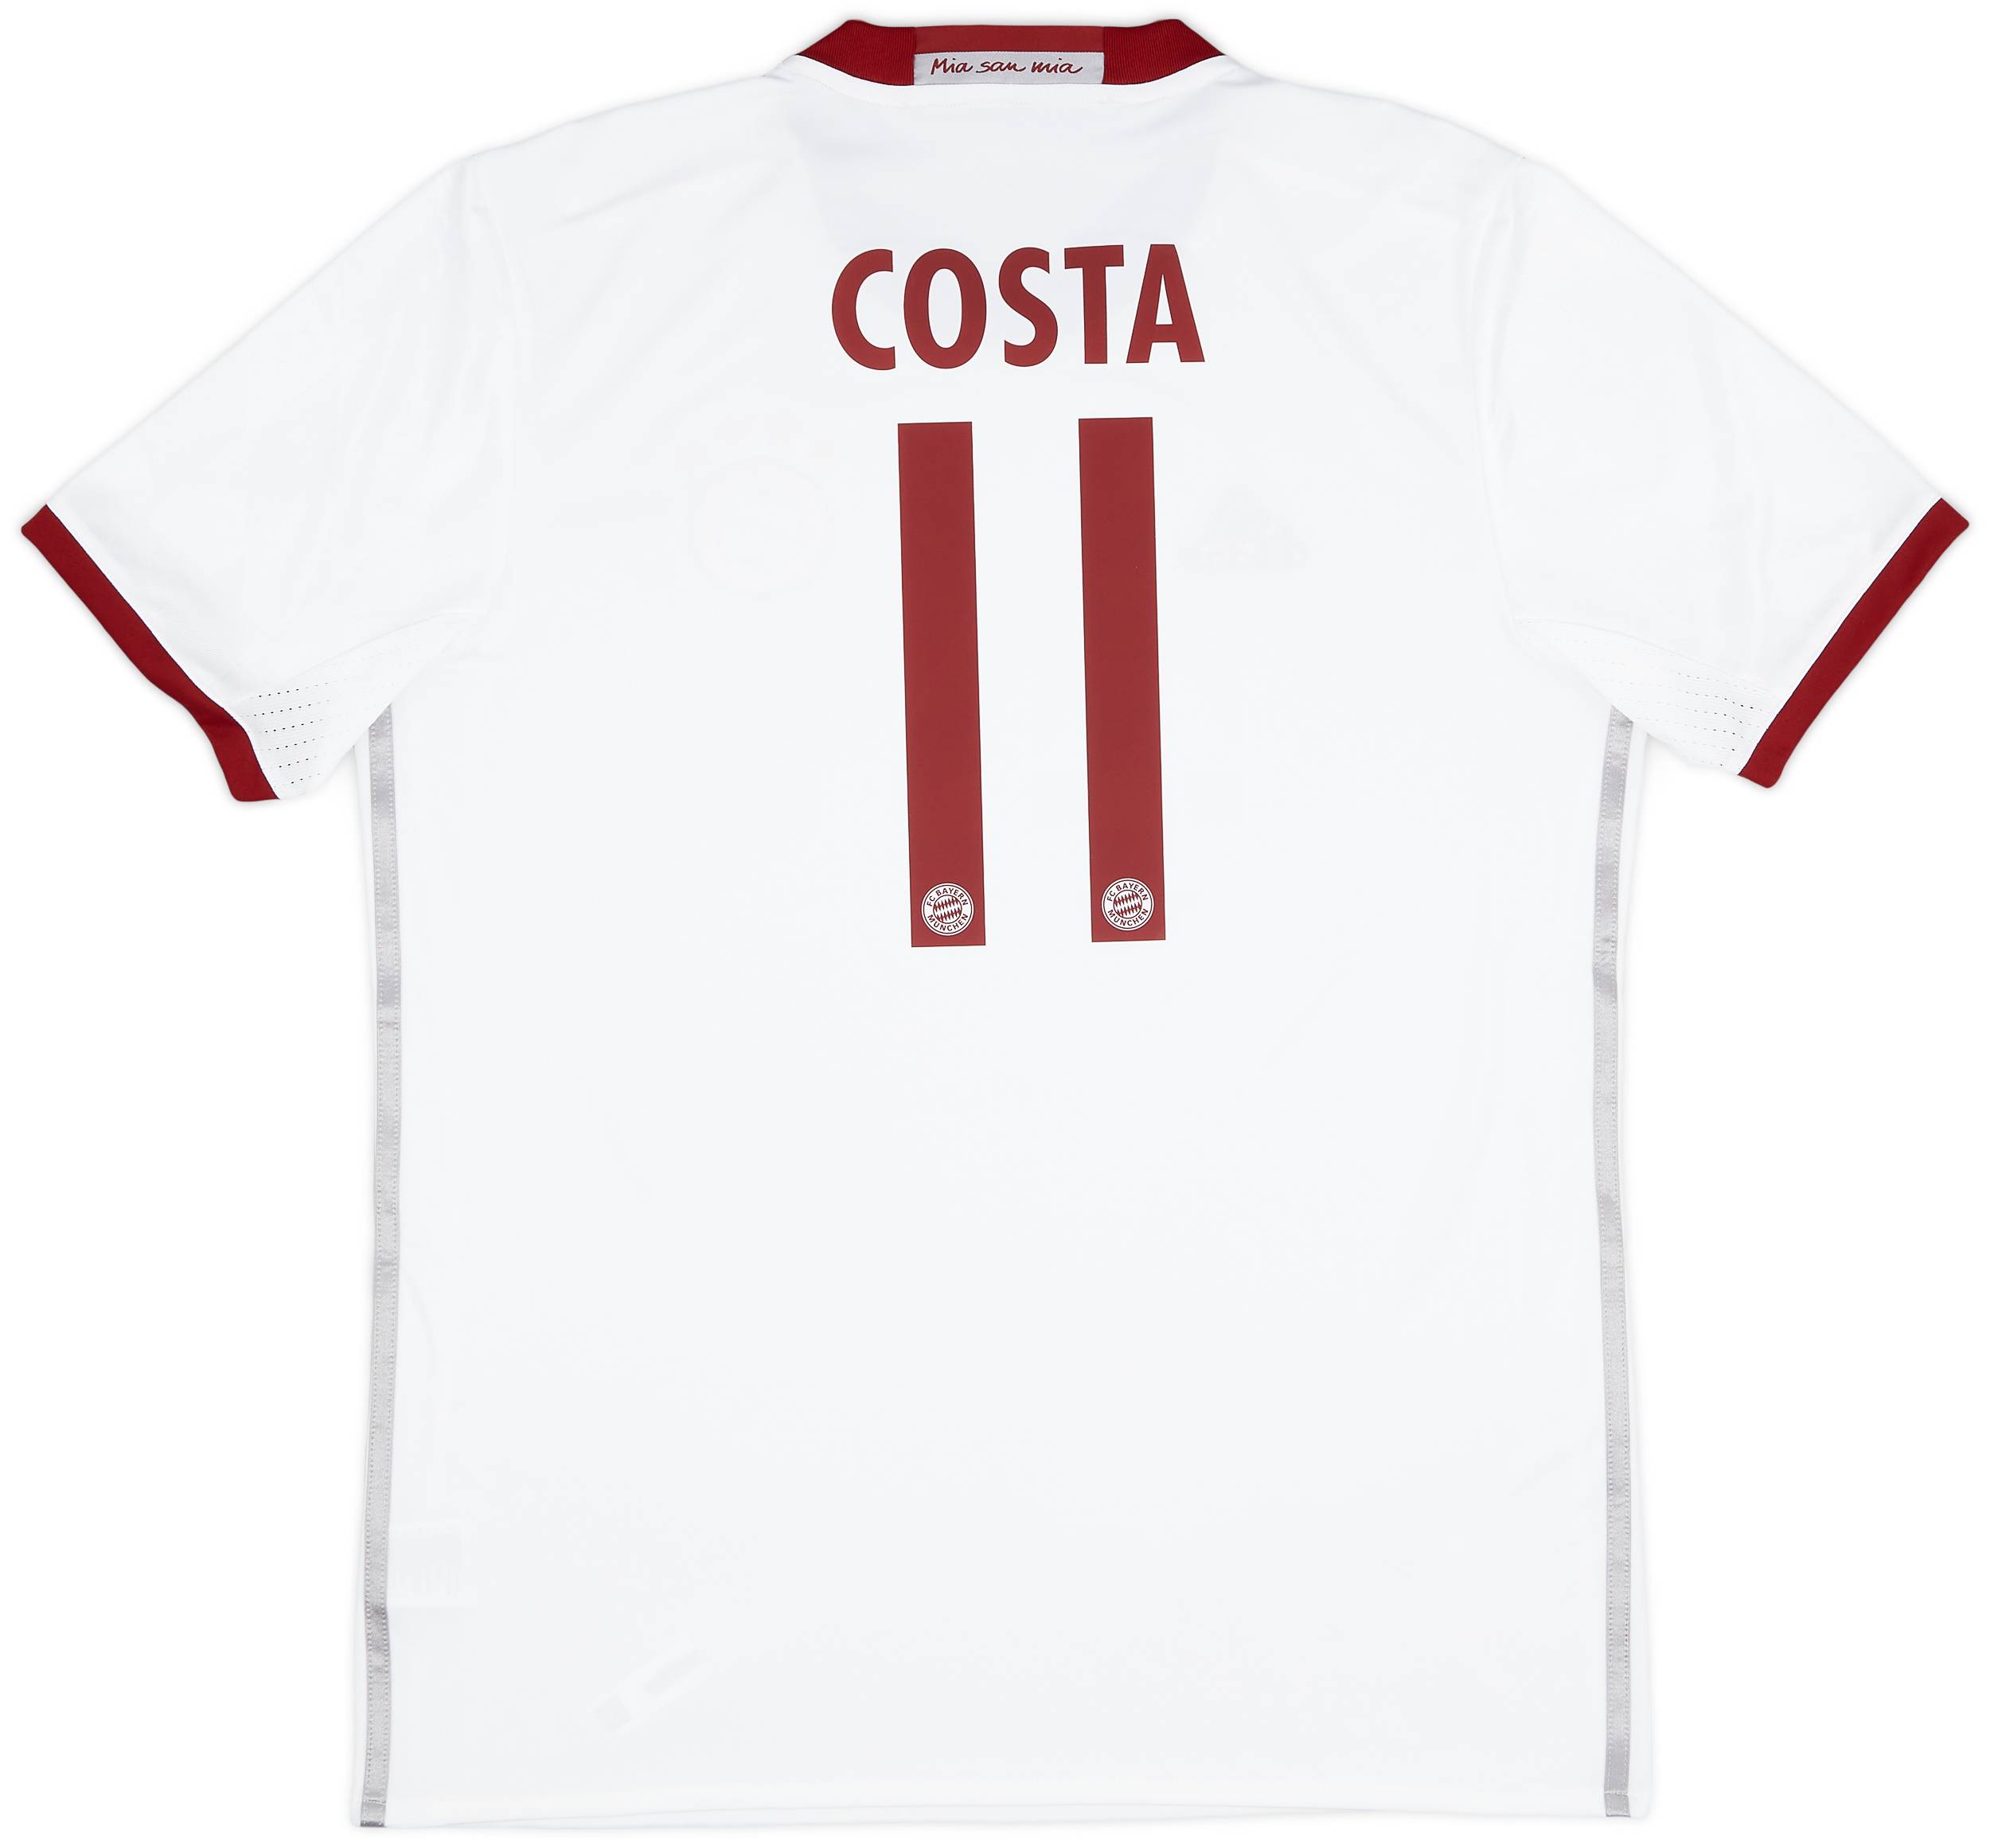 2016-17 Bayern Munich Third Shirt Costa #11 - 9/10 - (L)